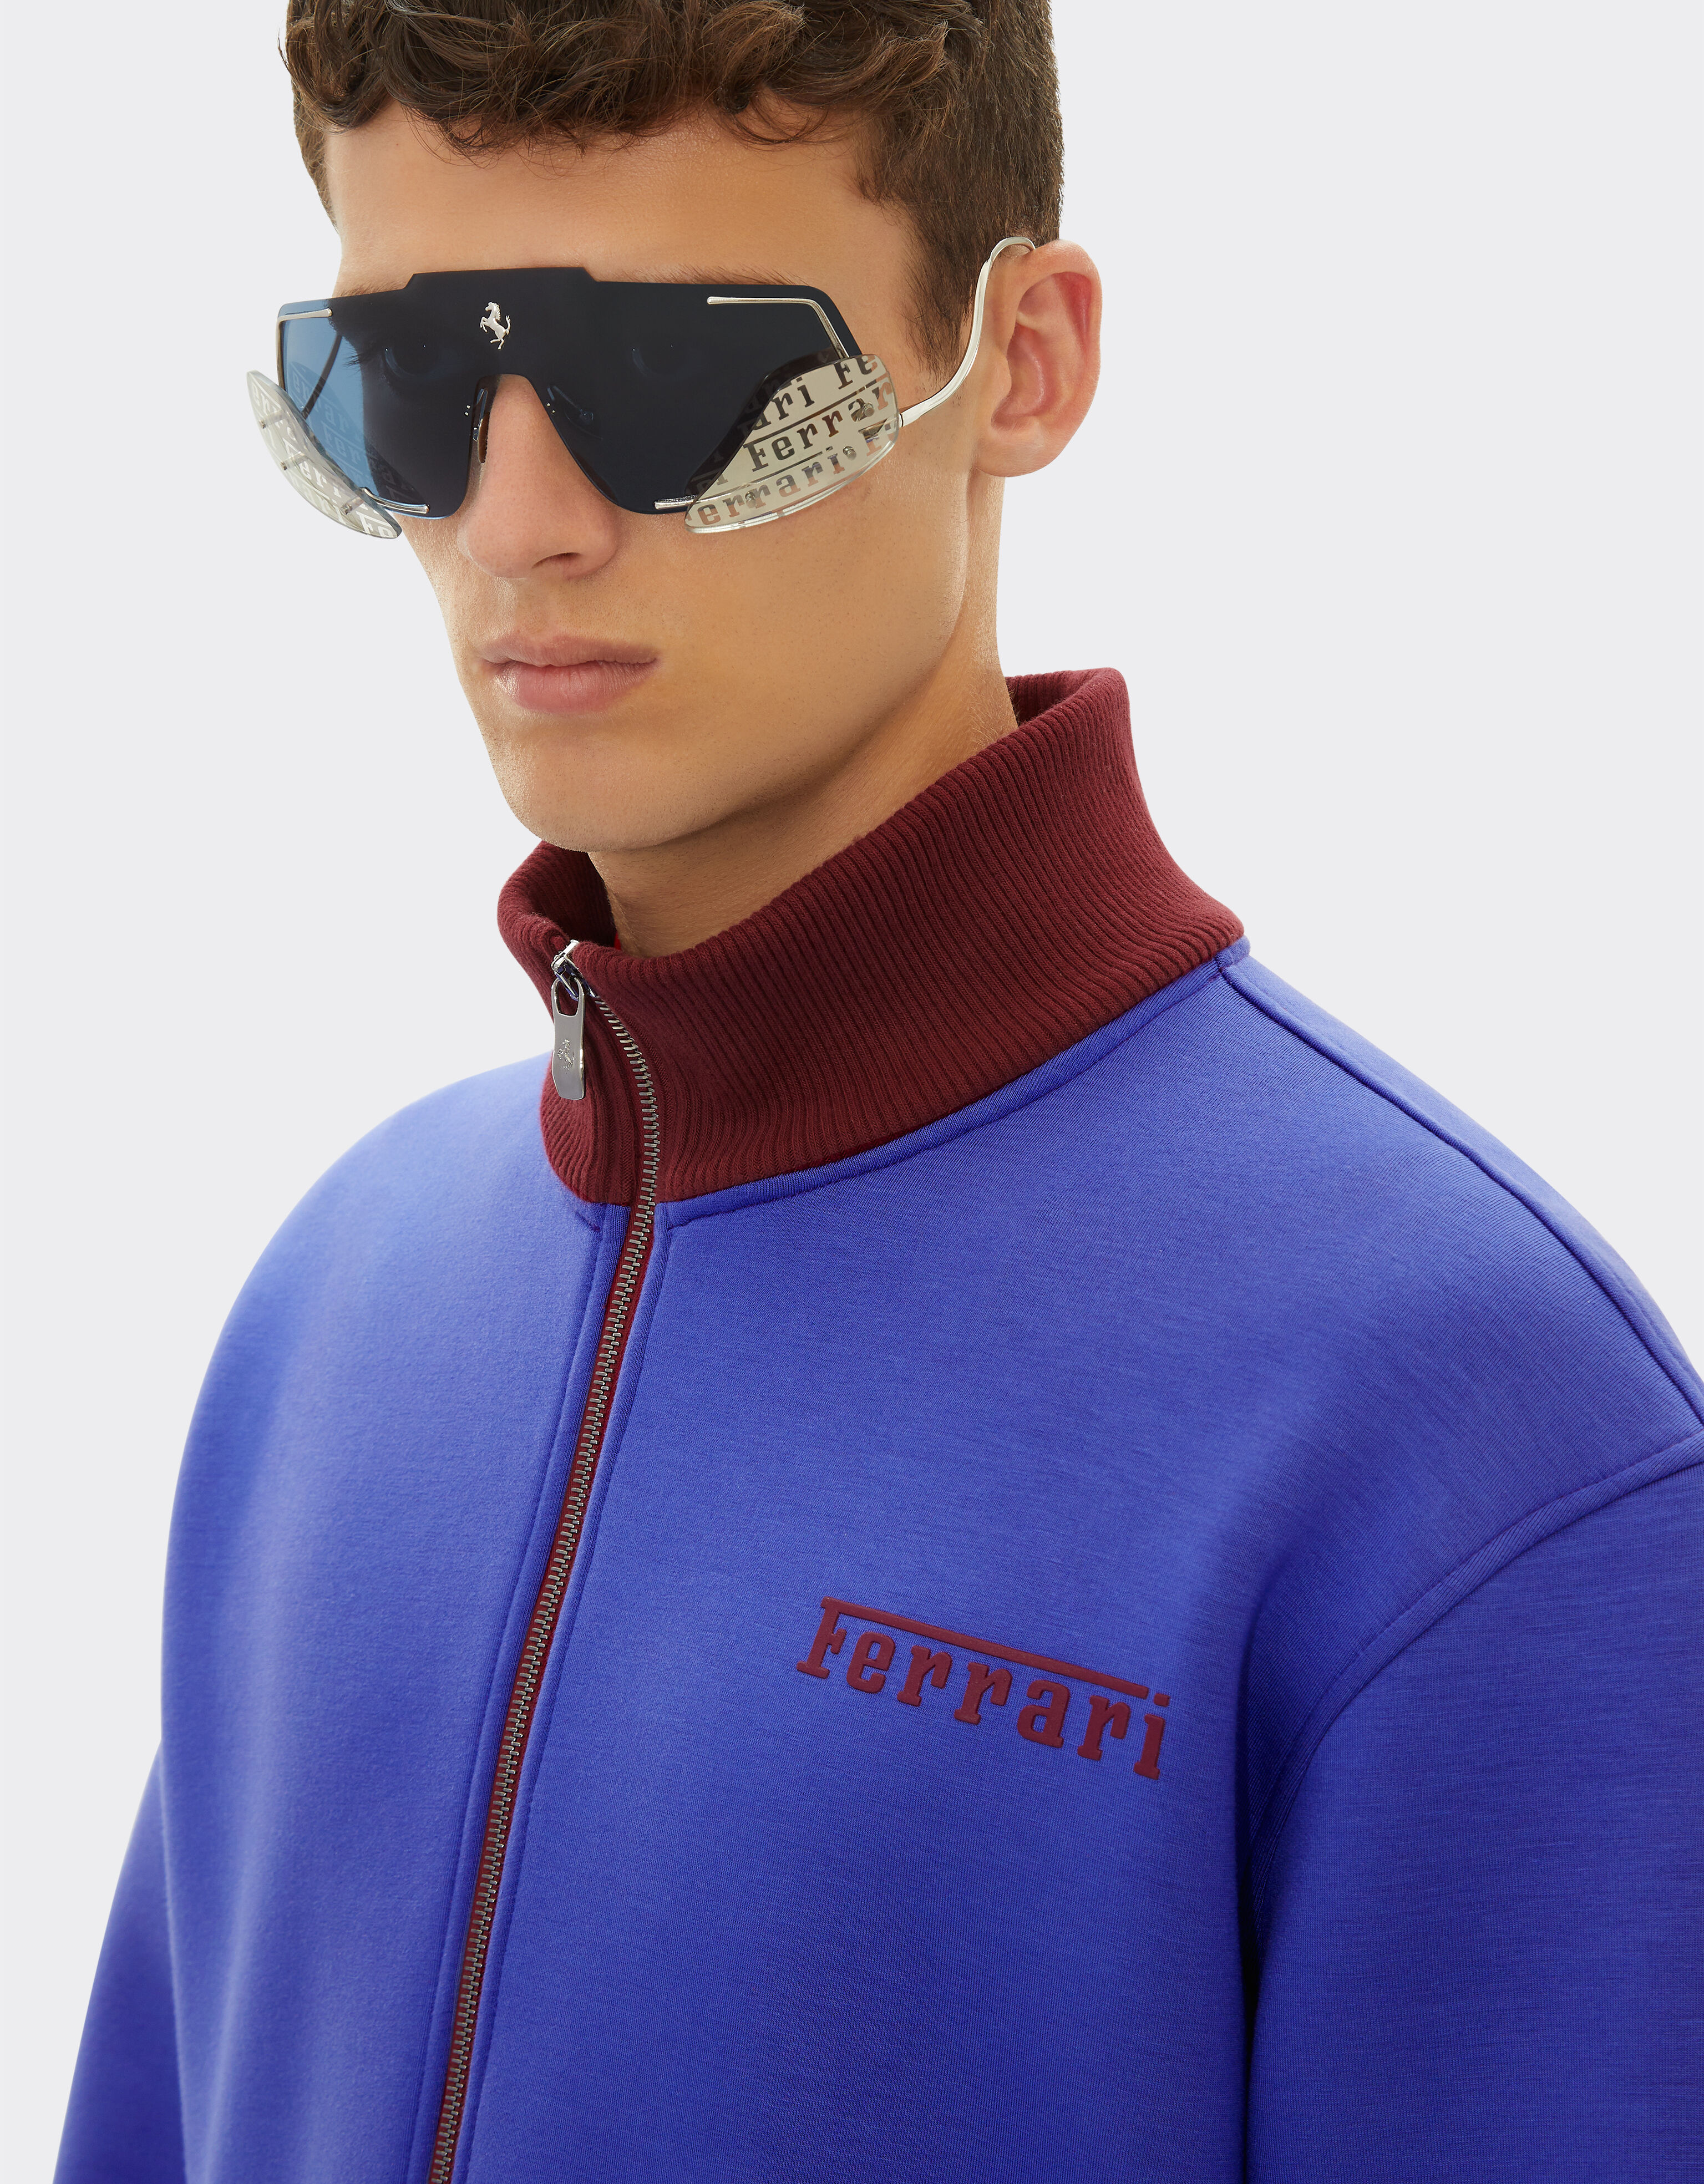 Ferrari Sweatshirt in scuba fabric with zip and Ferrari logo Antique Blue 48268f